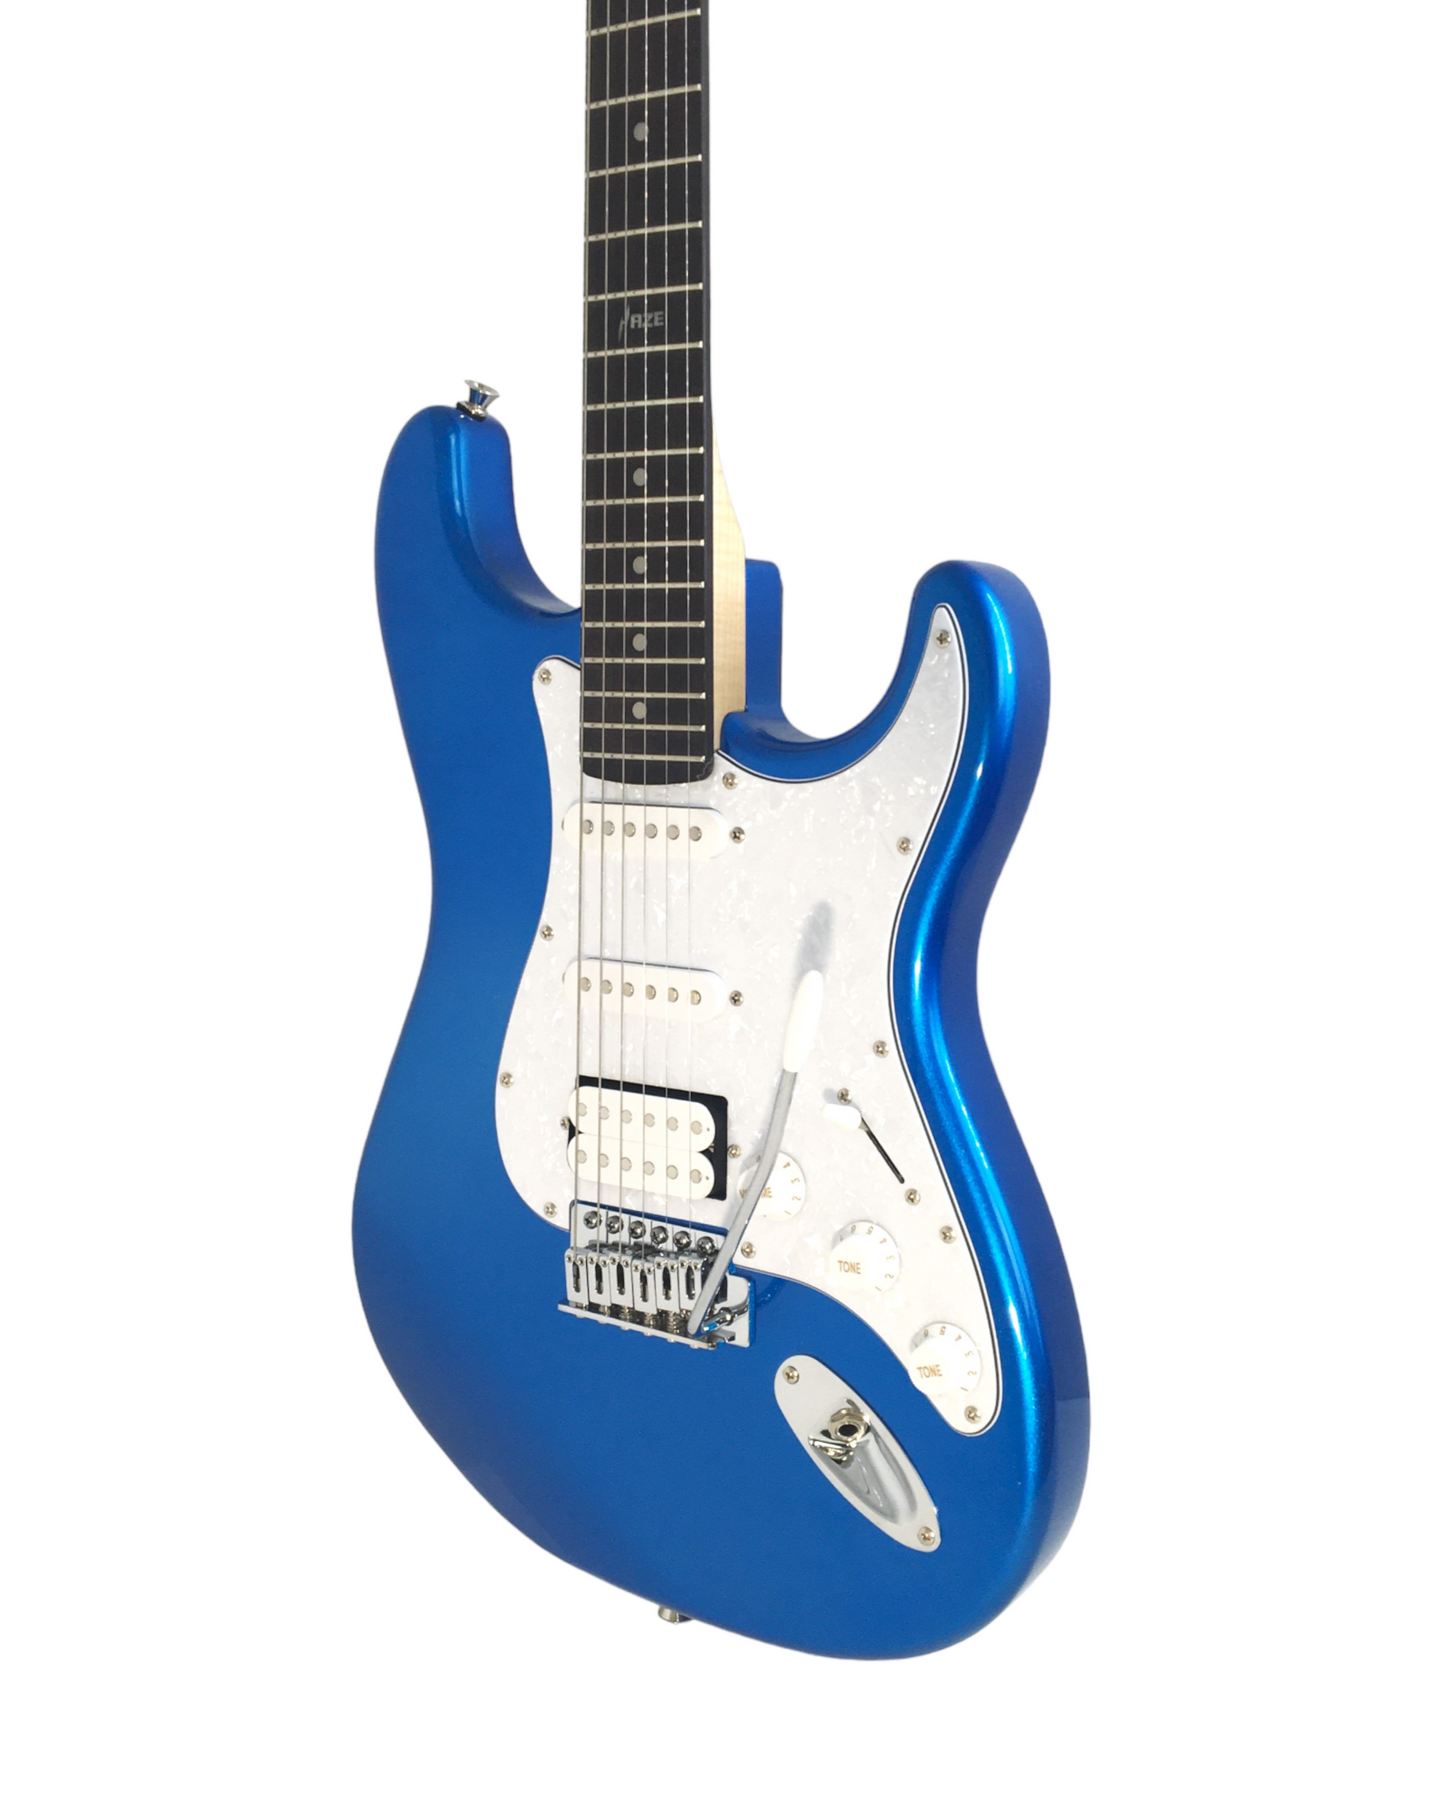 Haze E211 Classic Blue Sapphire HST Electric Guitar Electric Guitar, Amp, Stand Pack!